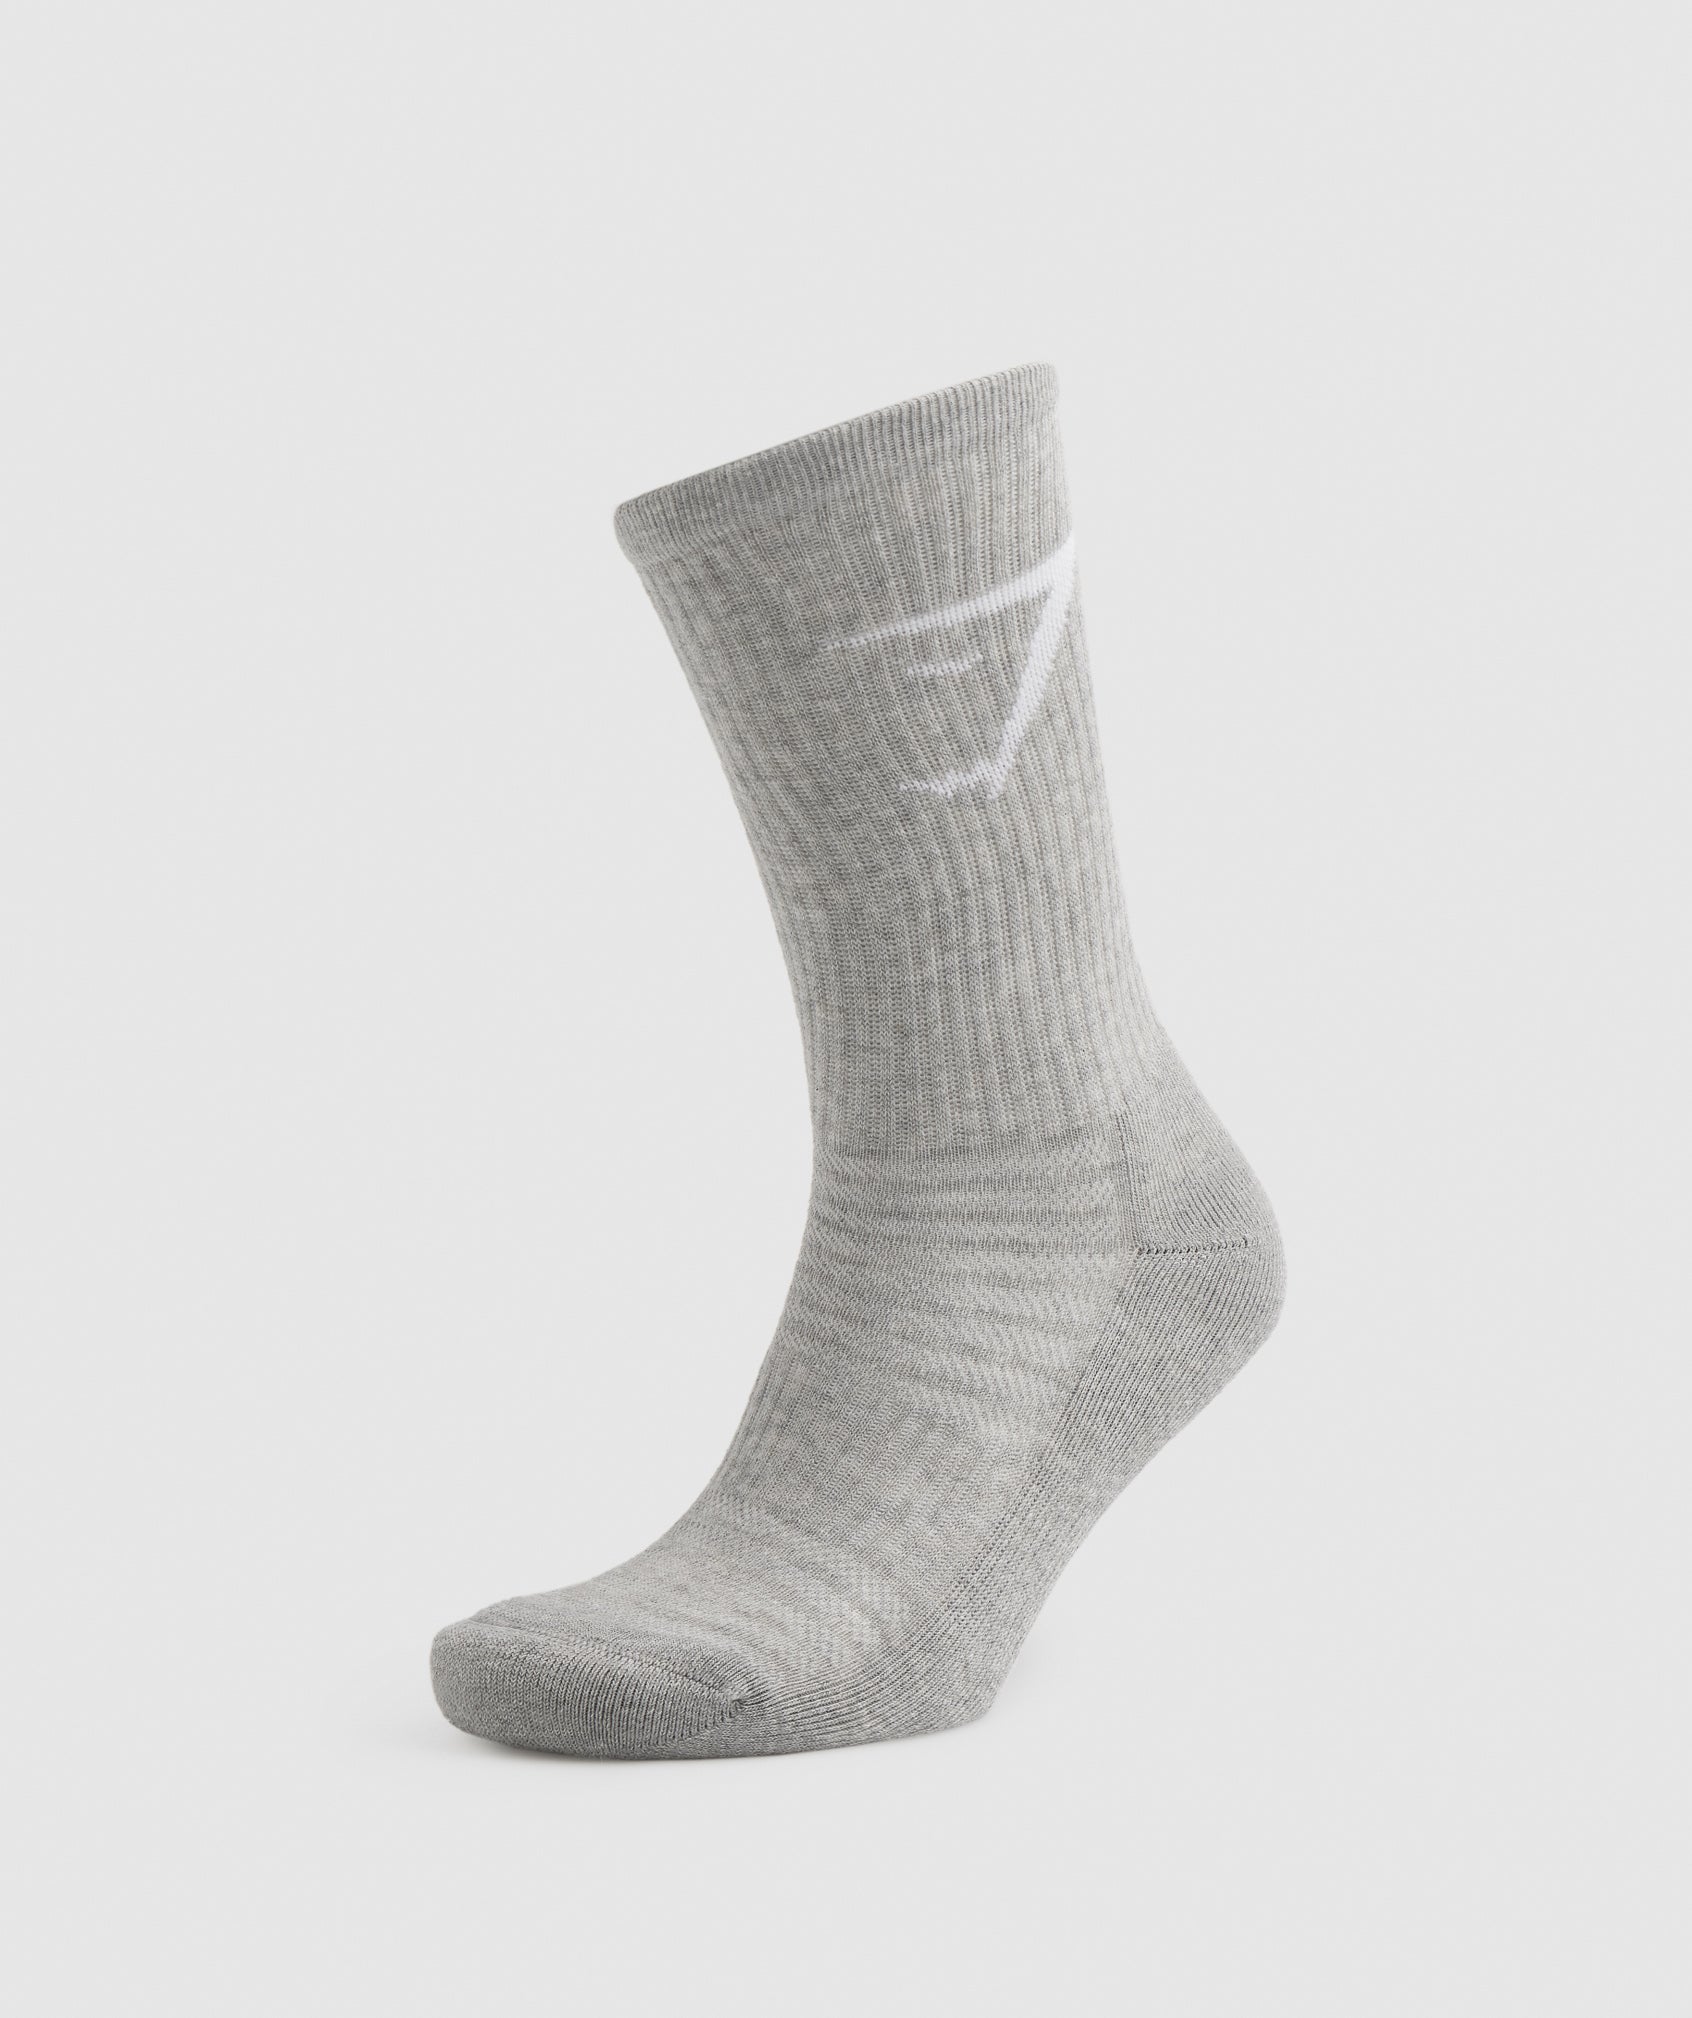 Crew Socks 3pk in White/Light Grey Marl/Black - view 4